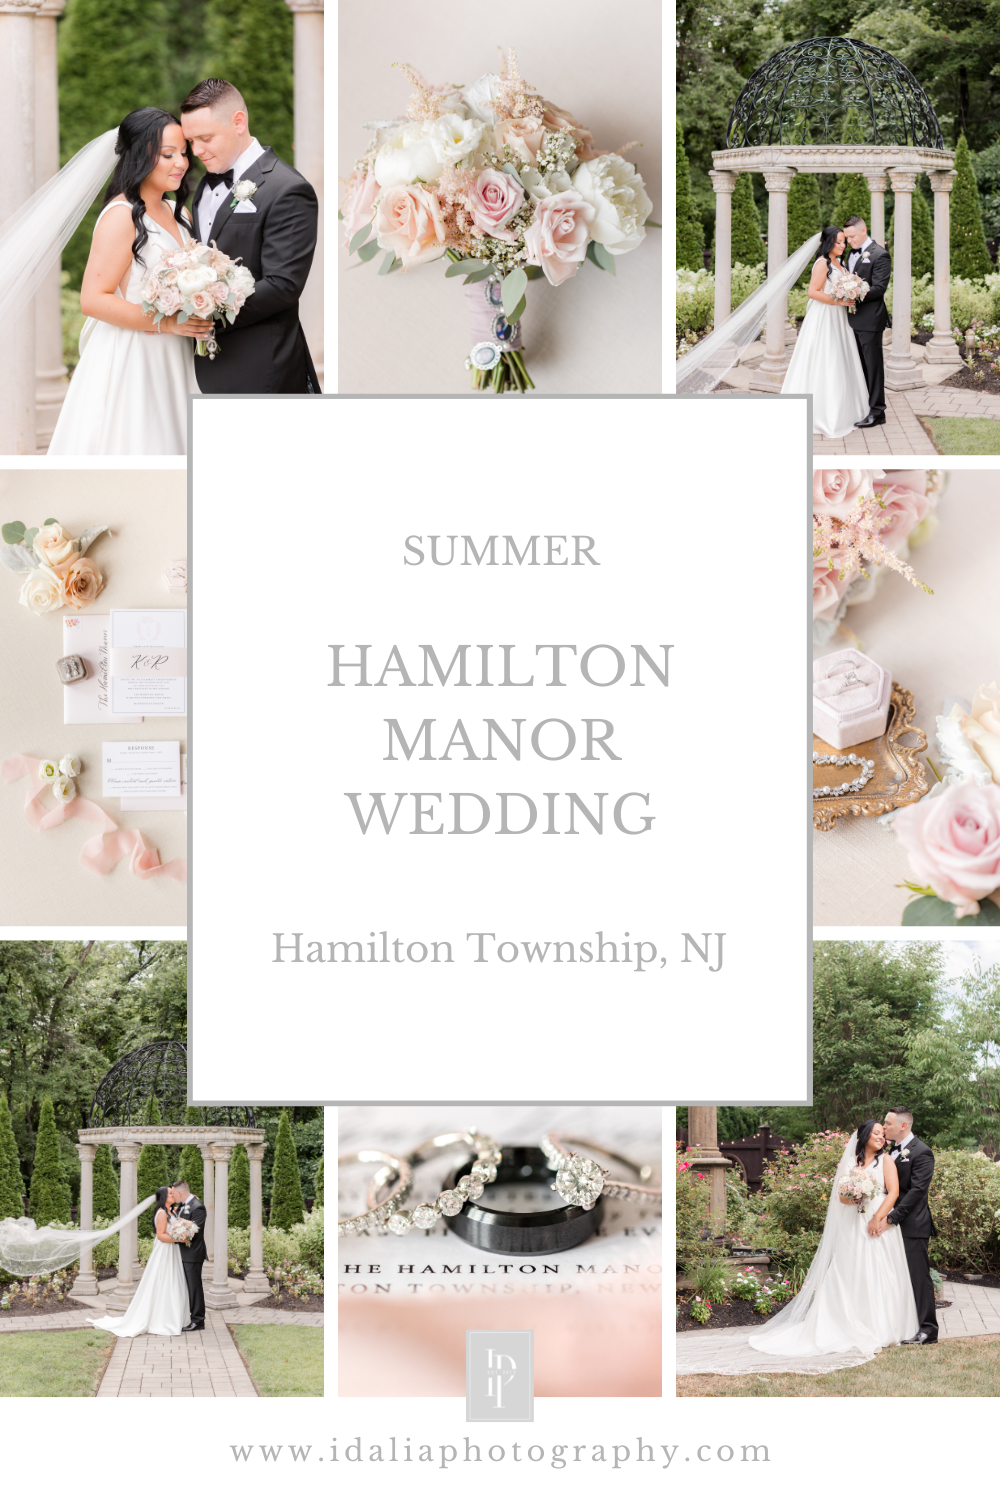 Hamilton Manor Wedding with rustic wedding details photographed by NJ wedding photographer Idalia Photography